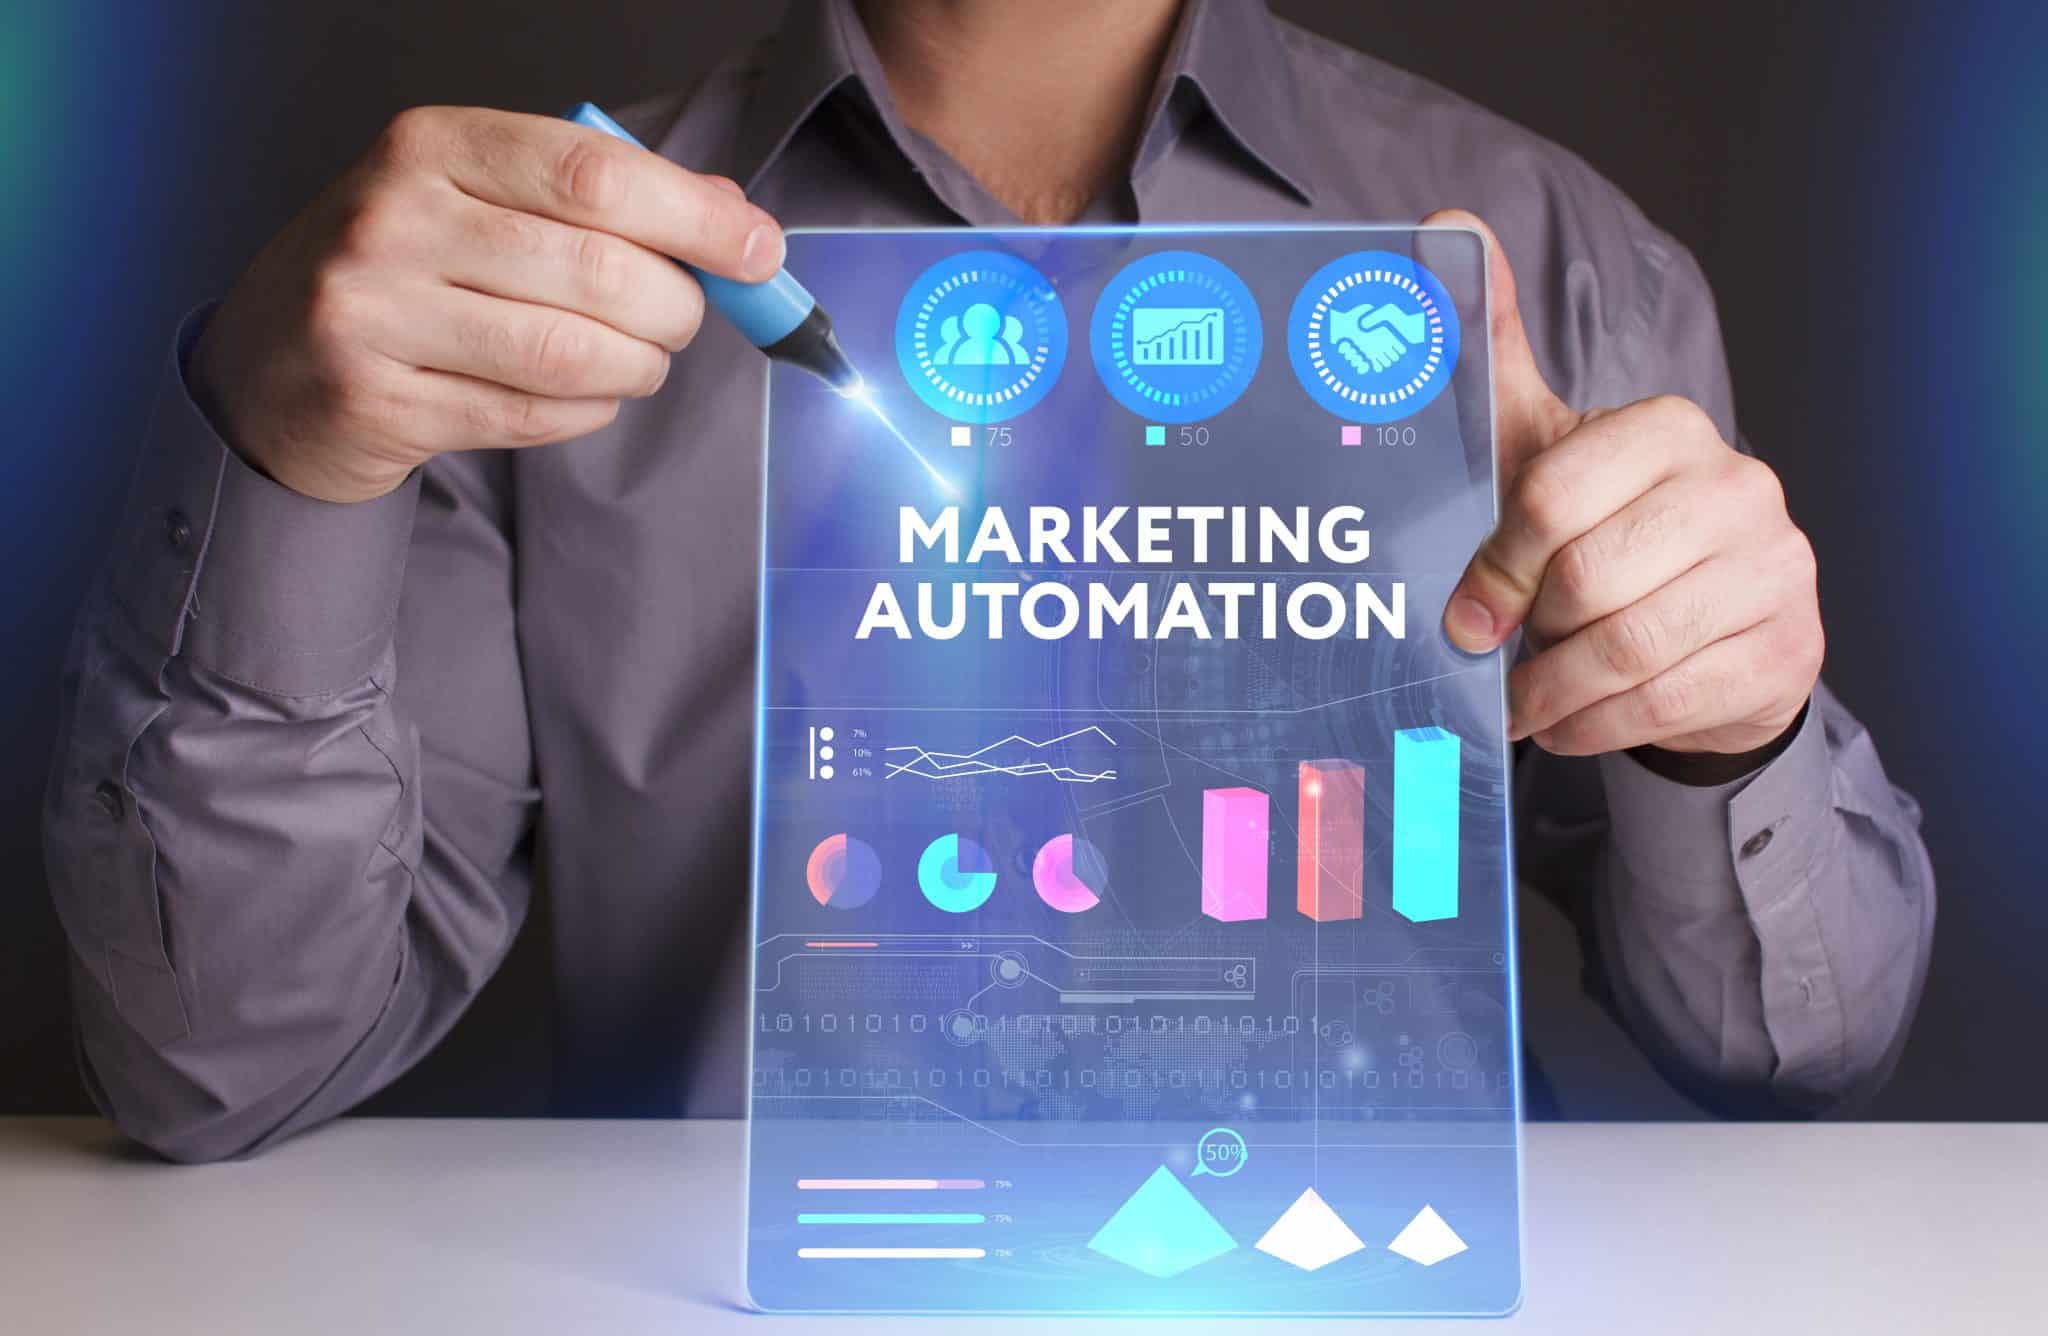 marketing automation - טכנולוגיית שיווק מתקדמת שתורמת להגדלת ההכנסות המבוססת על דאטה של הלקוחות